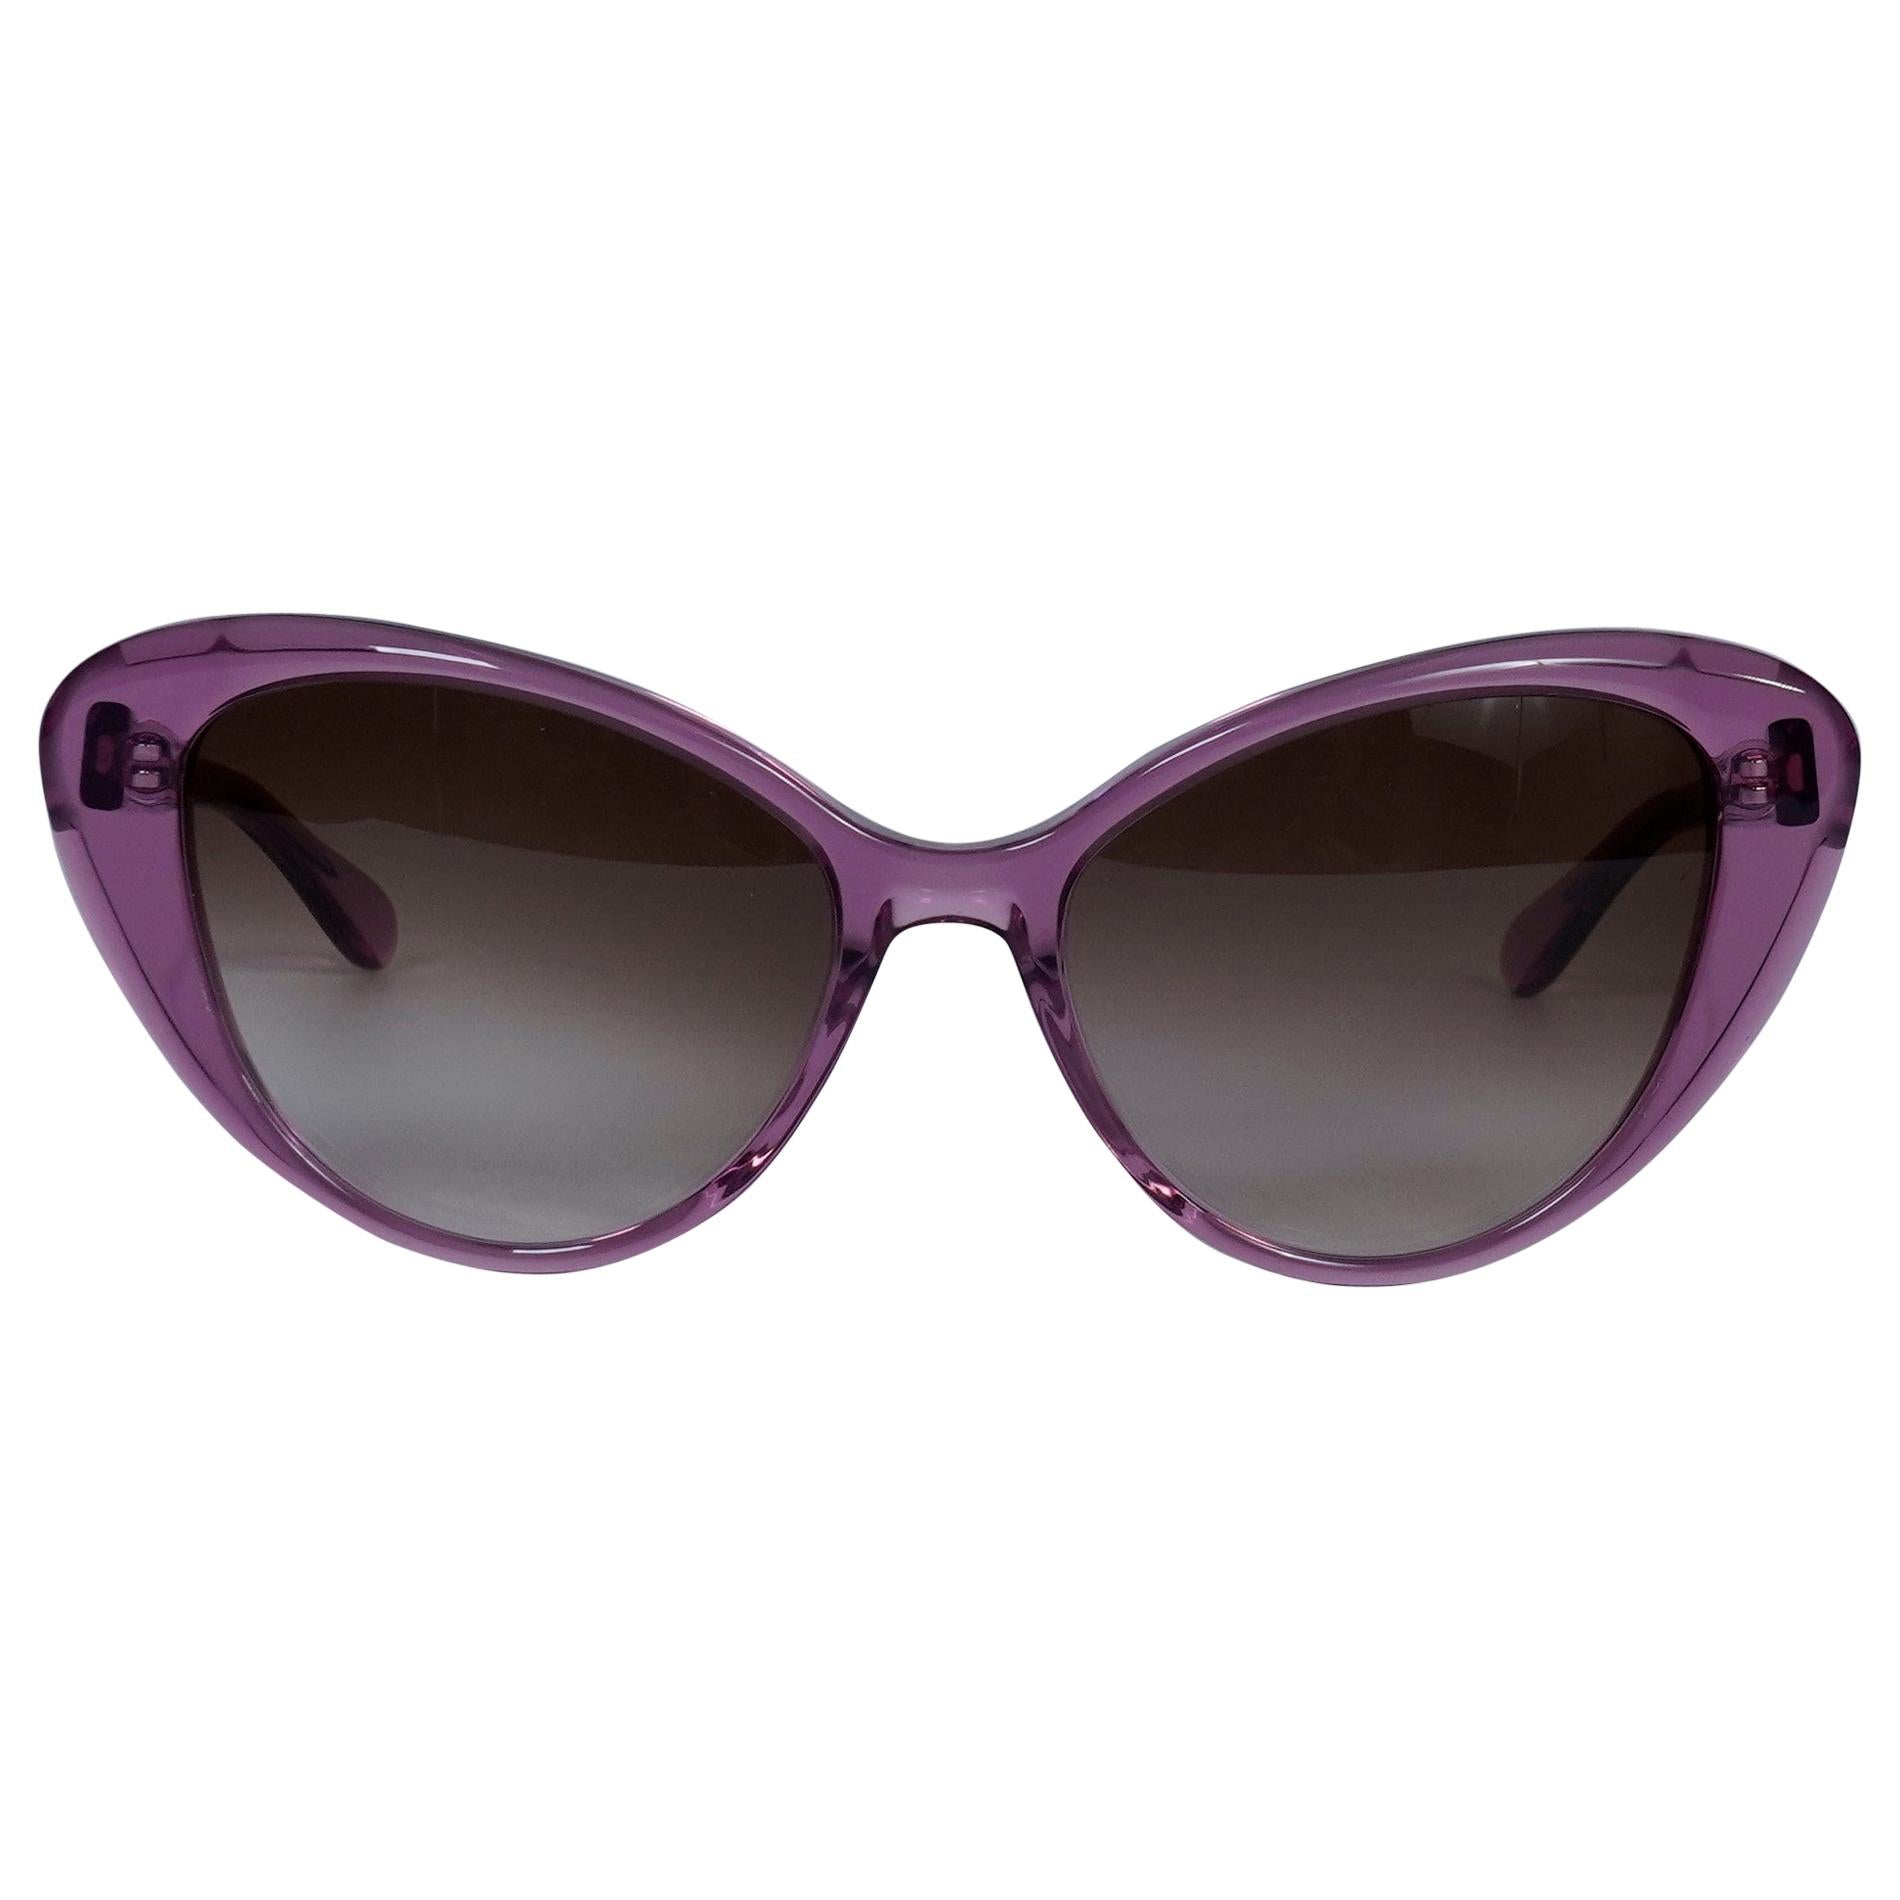 Aru Eyewear pink sunglasses